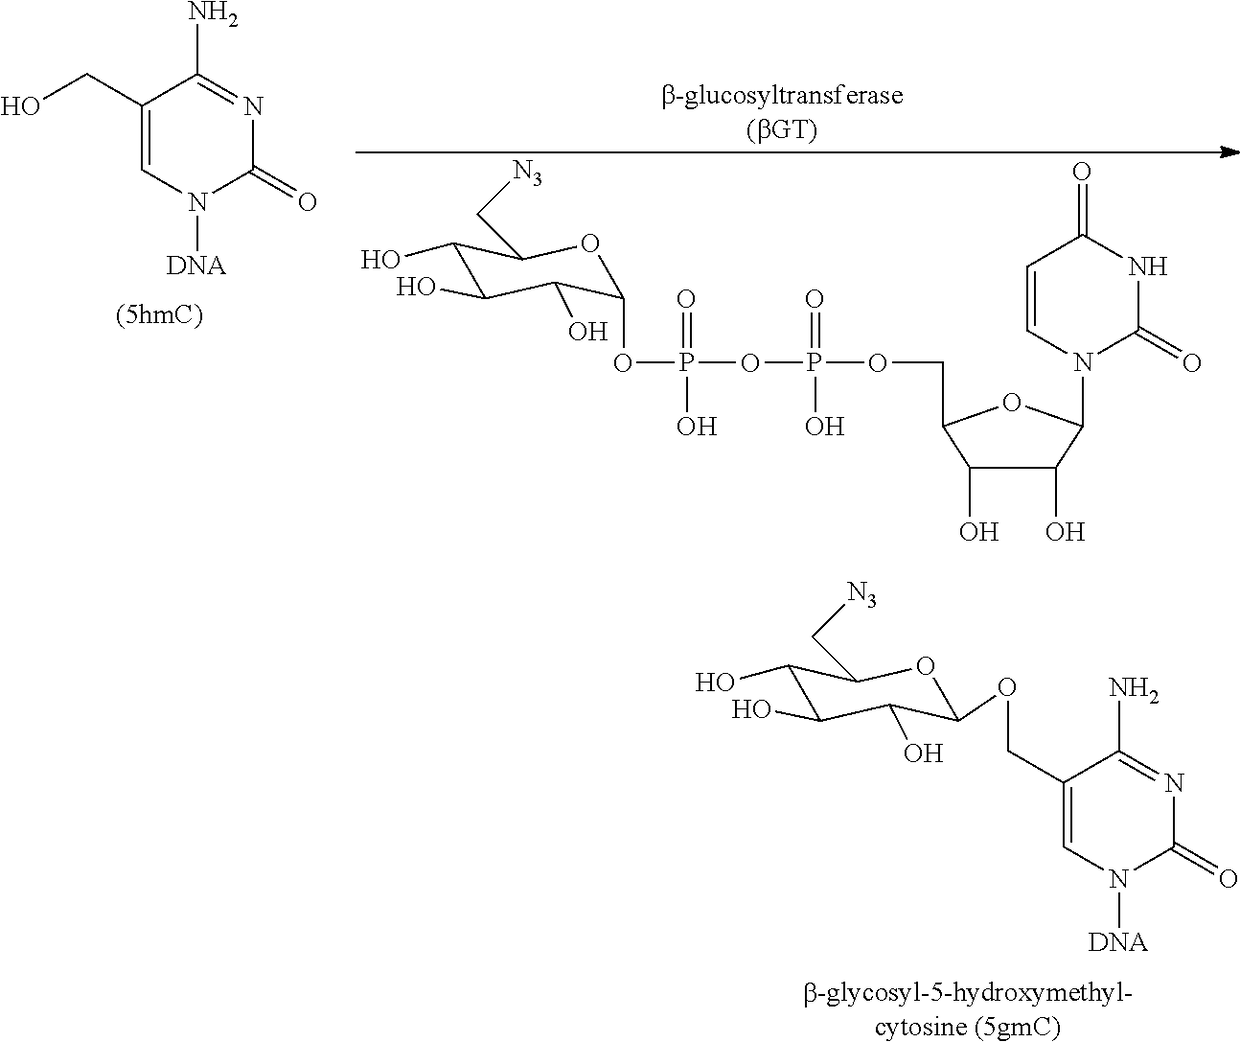 Method for genomic profiling of DNA 5-methylcytosine and 5-hydroxymethylcytosine